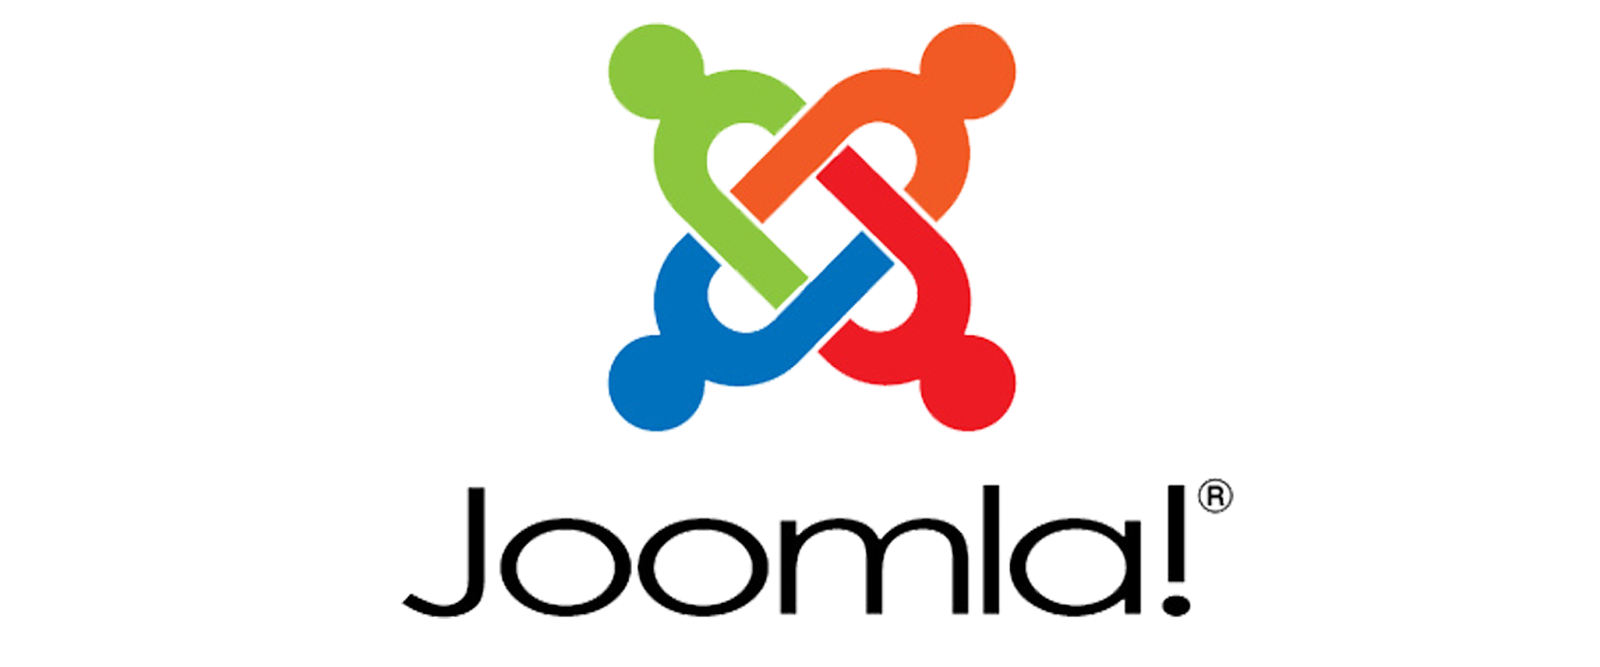 Joomla-Web-Development